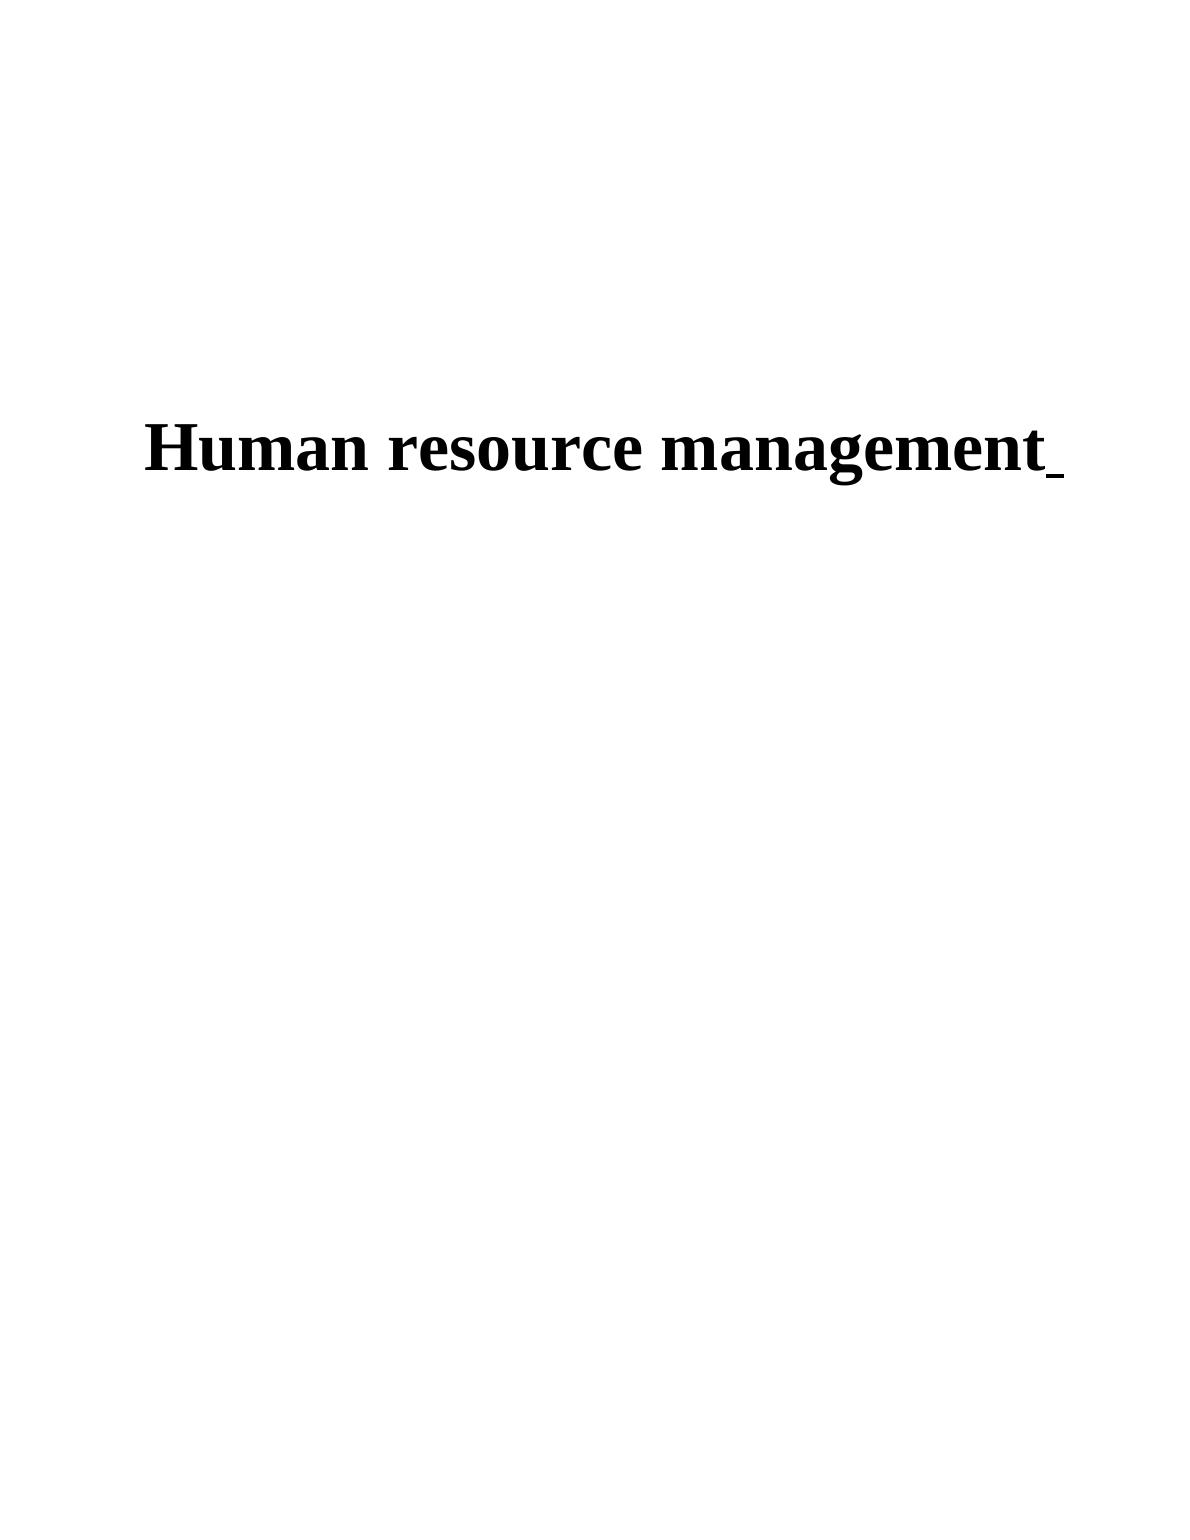 Human Resource Management Assignment Solution (Doc)_1